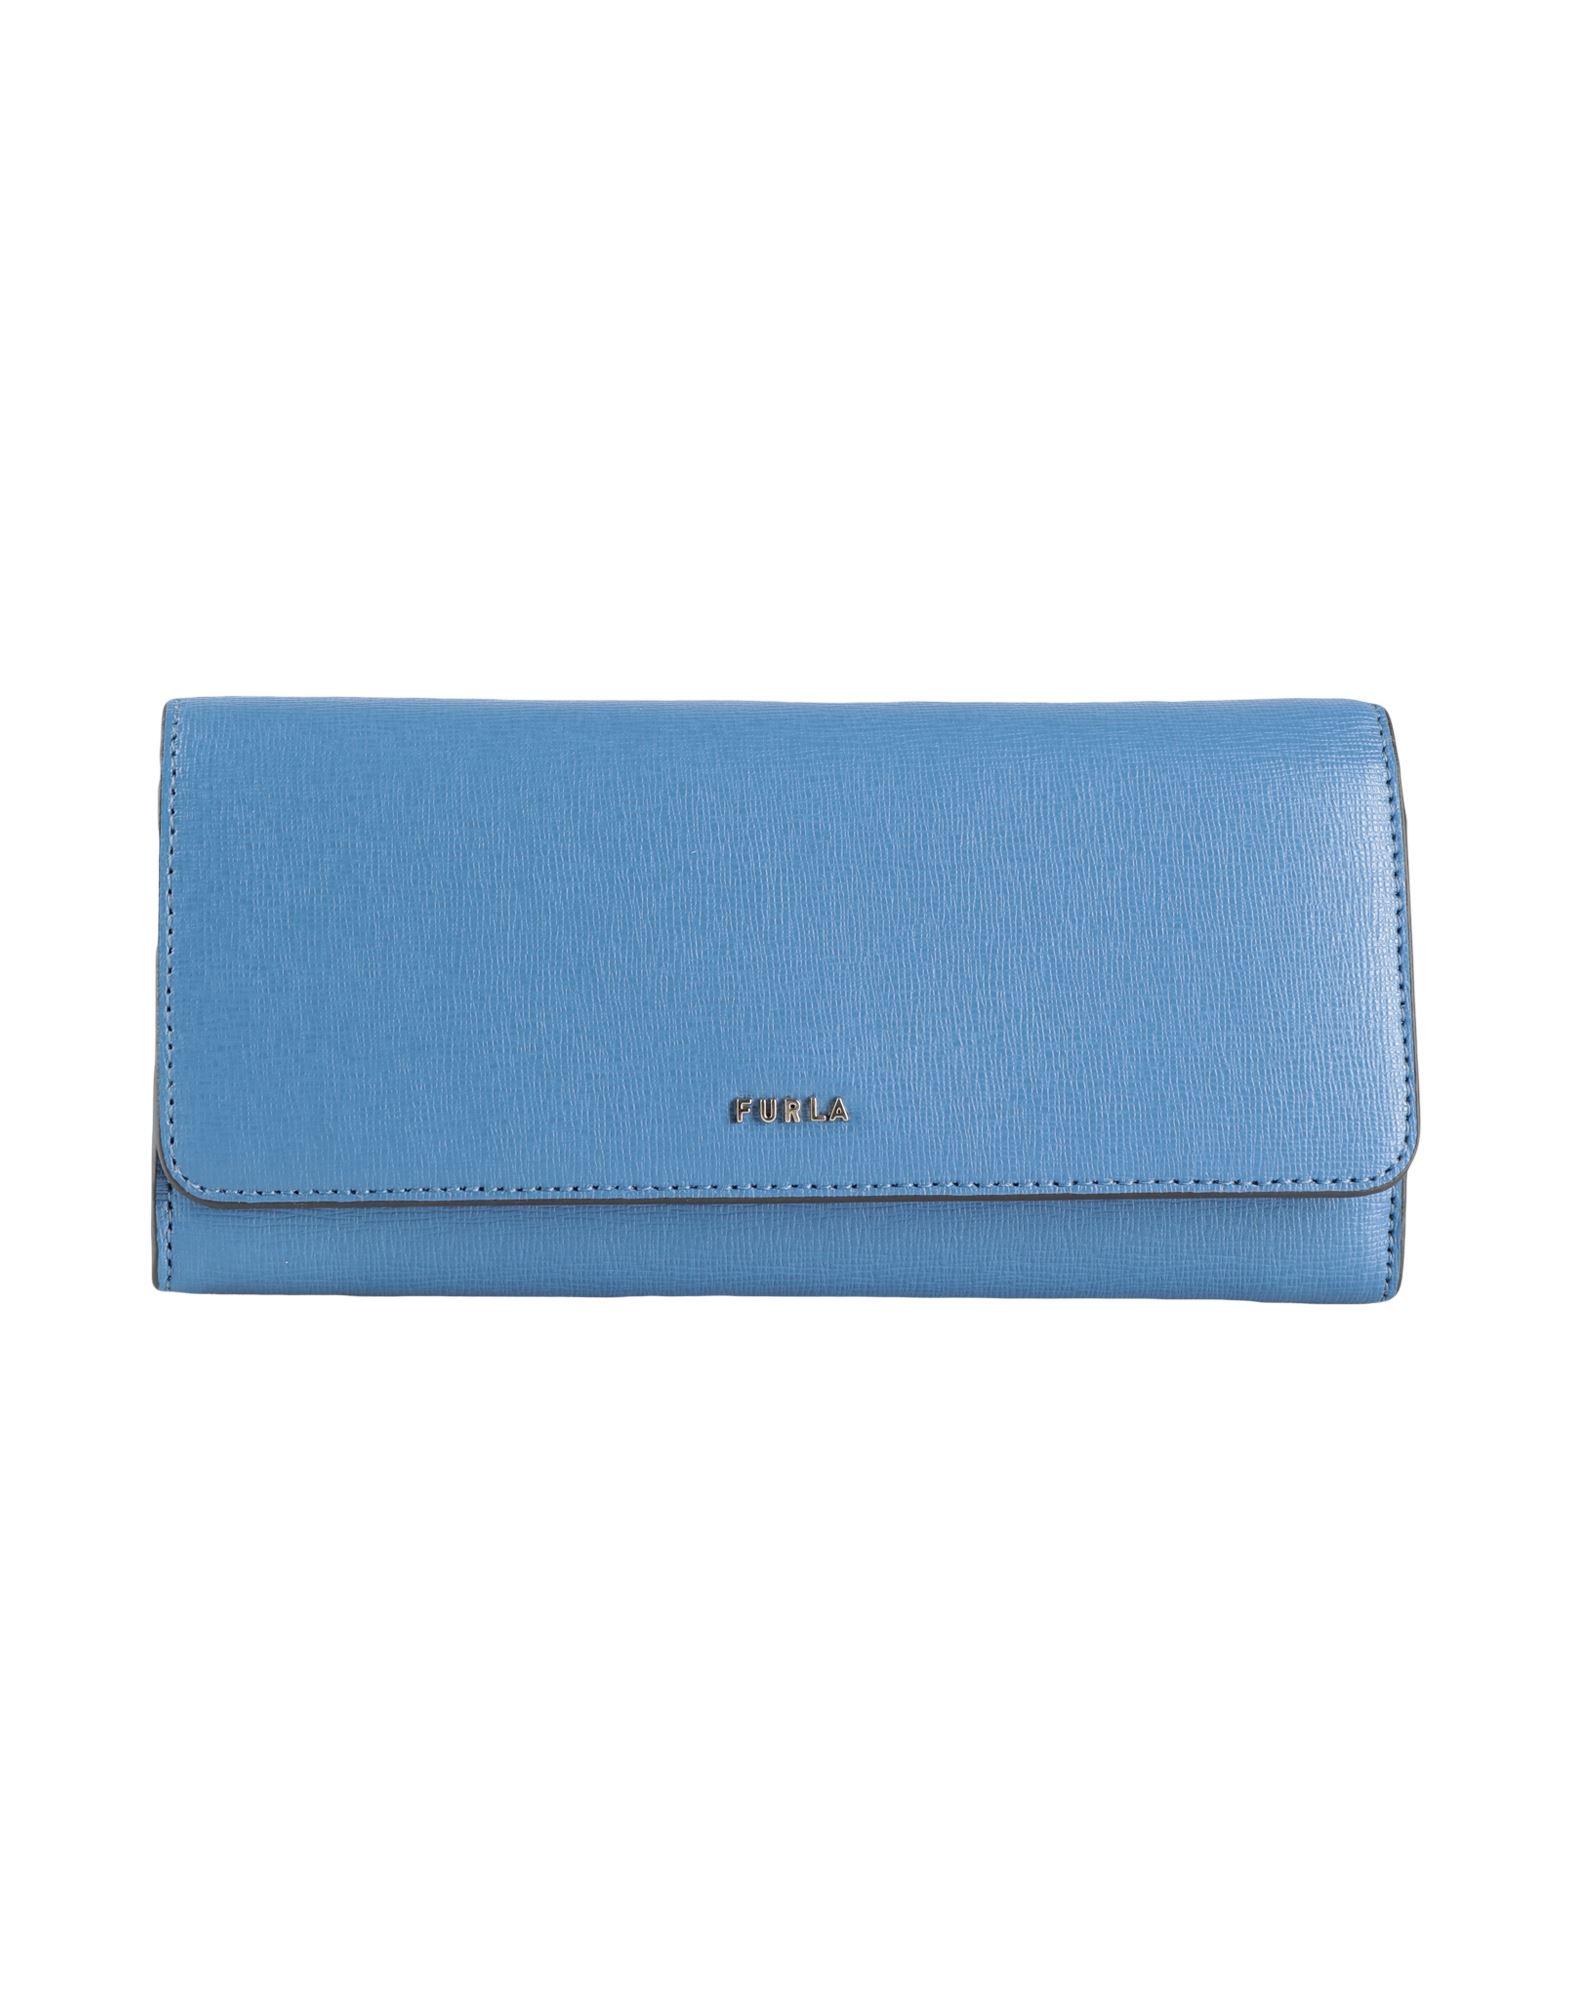 Furla Babylon Continental Wall Woman Wallet Slate Blue Size - Soft Leather